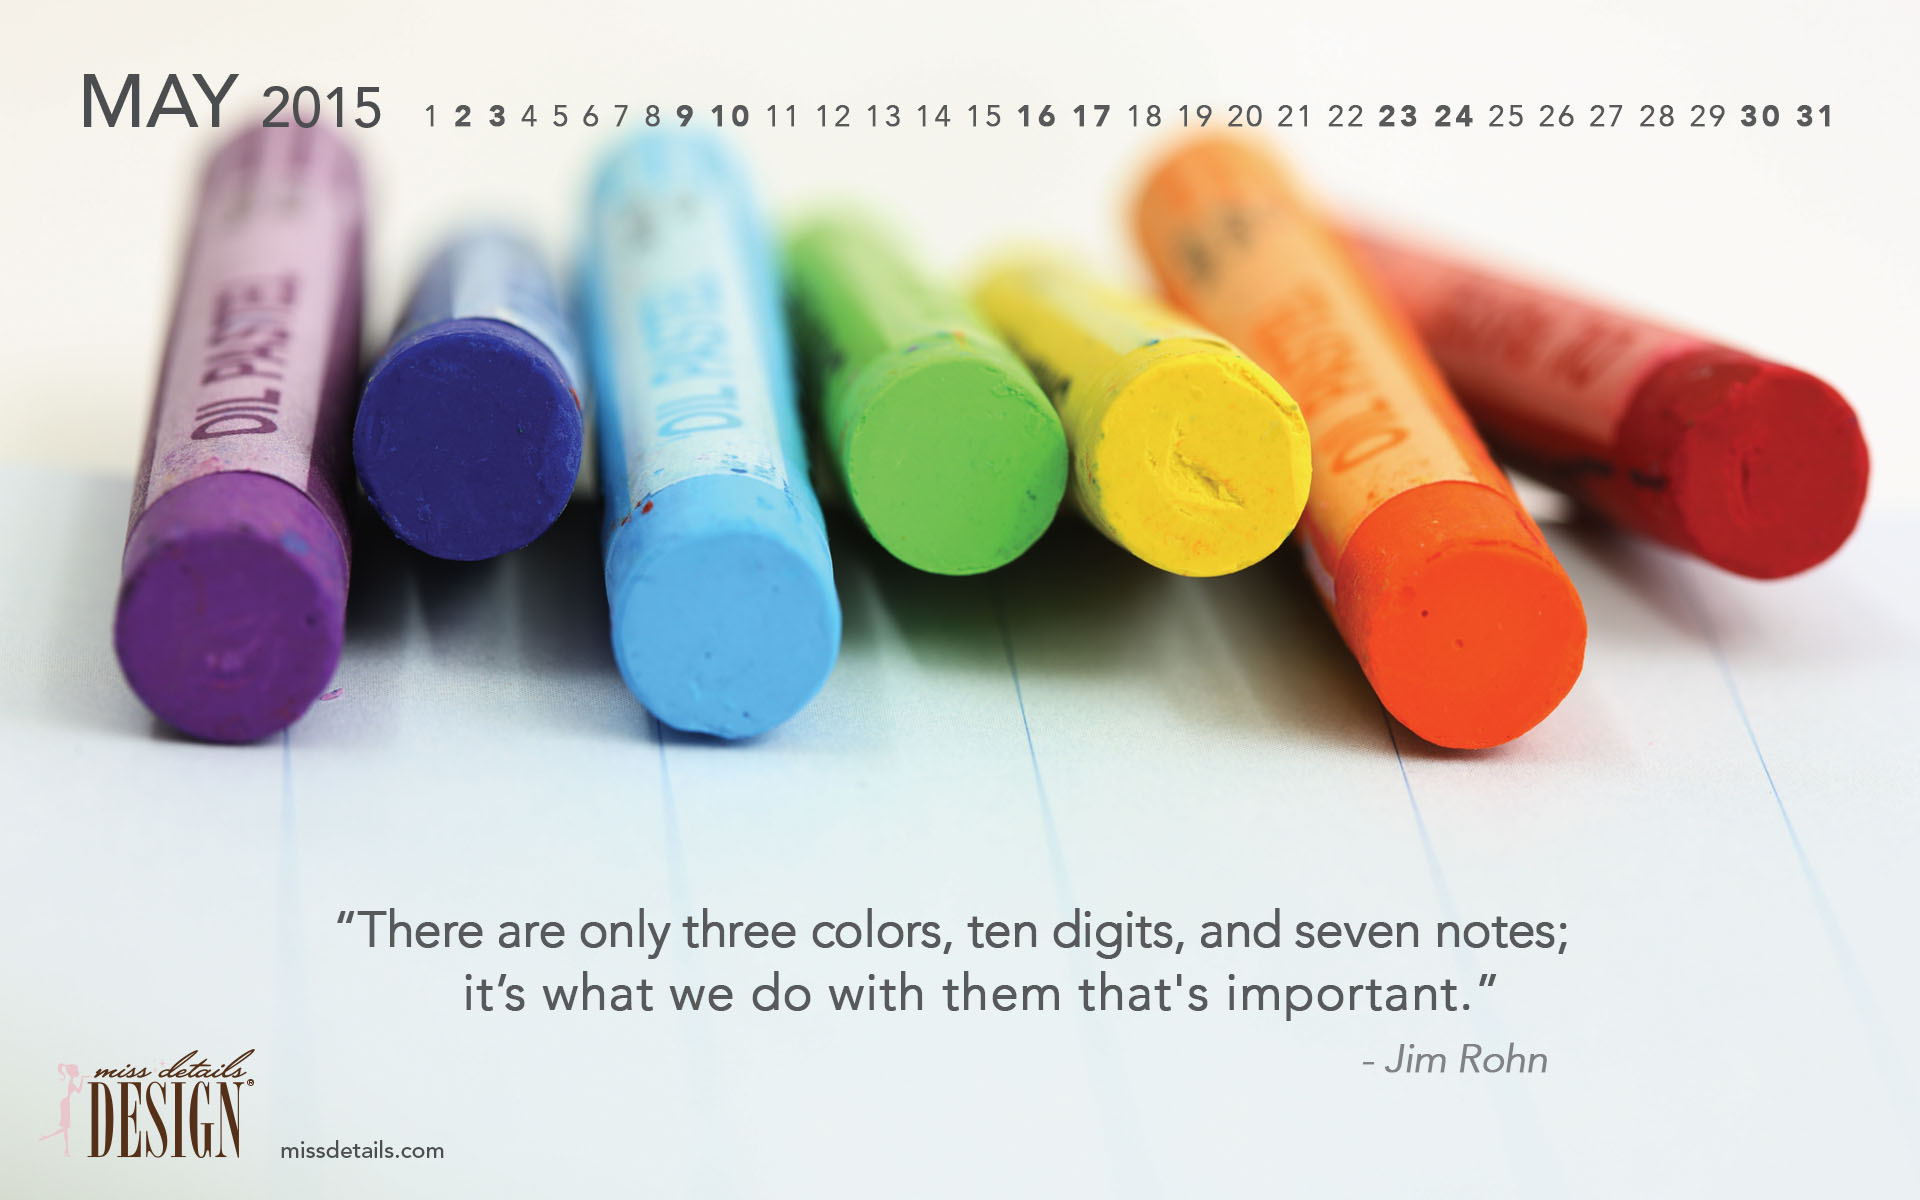 May 2015 free desktop wallpaper from missdetails.com - Jim Rohn #Quote